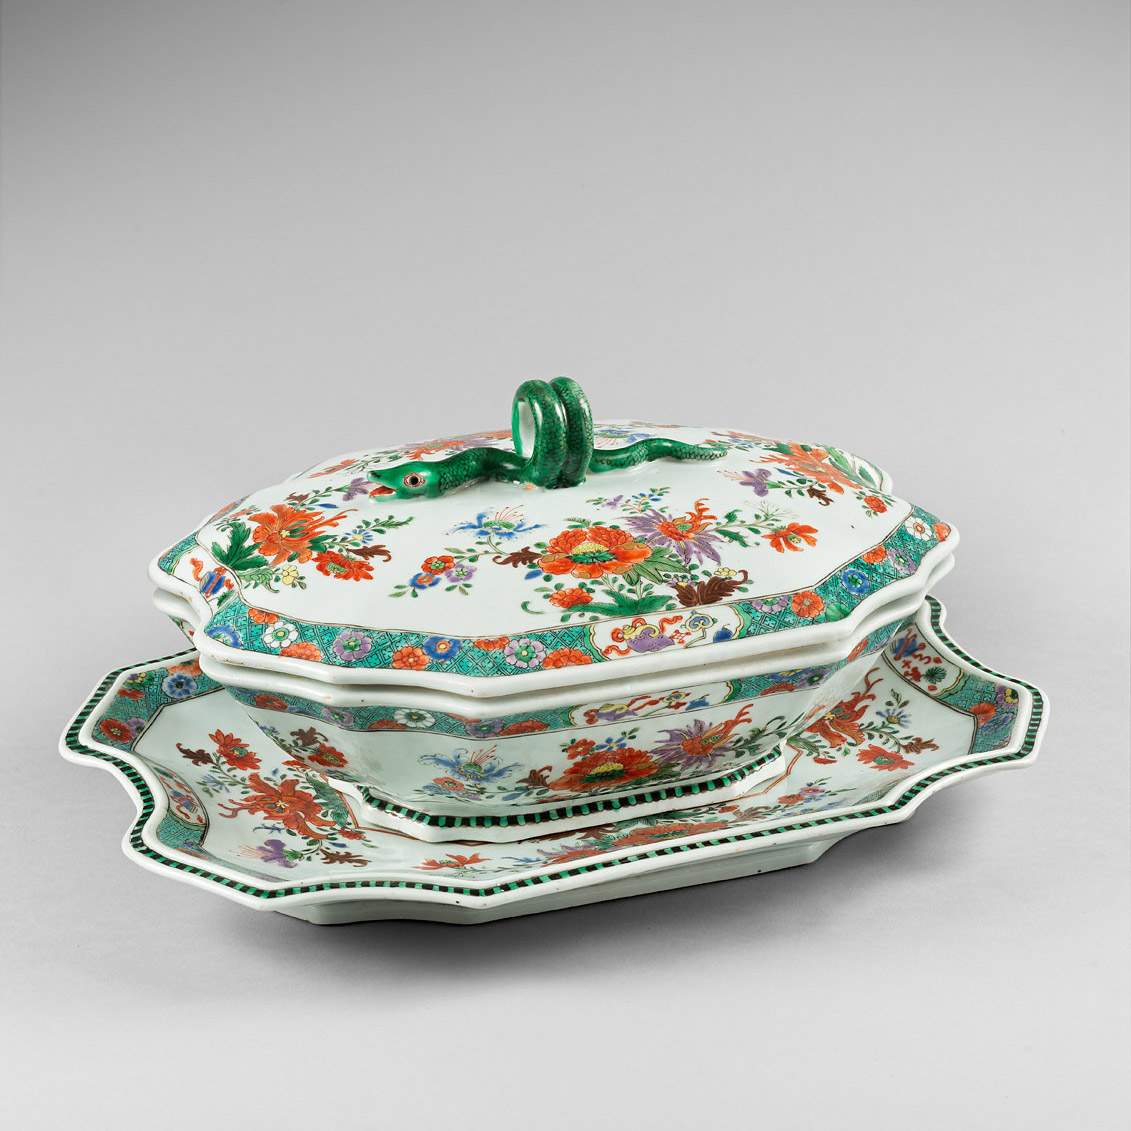 Famille verte Porcelain Kangxi period (1662-1722) / Yongzheng period (1736-1795), ca. 1720/1730, China